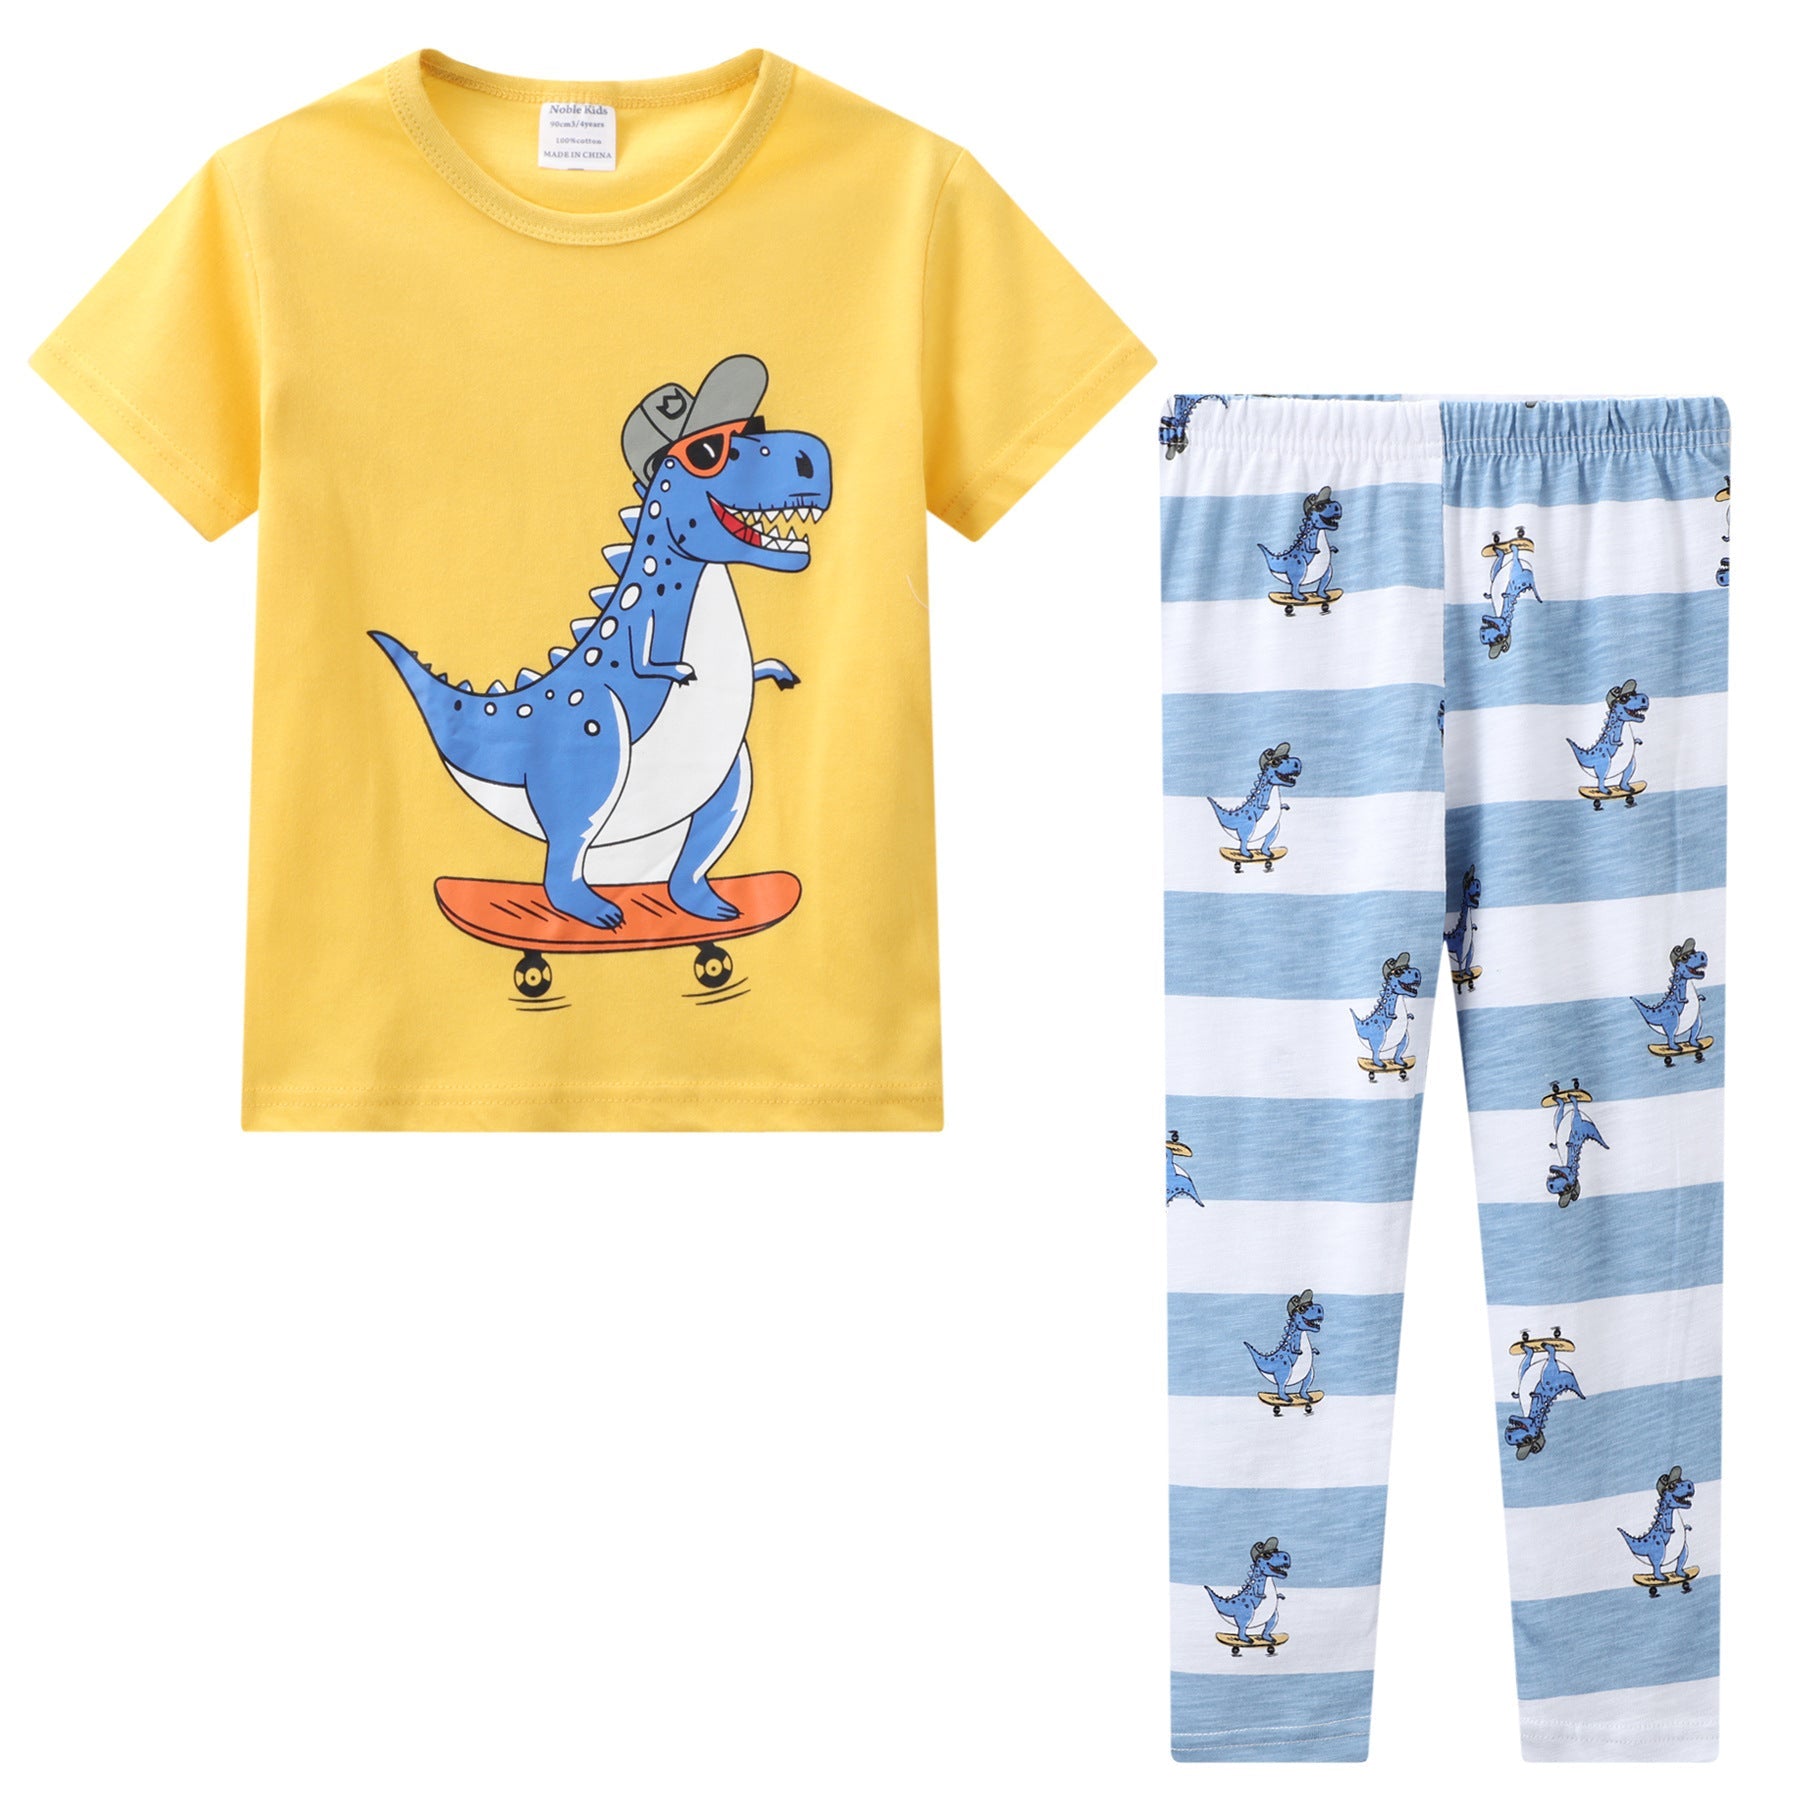 Boy Dinosaur Print Short Sleeve Tops & Pants Yellow Lounge Set